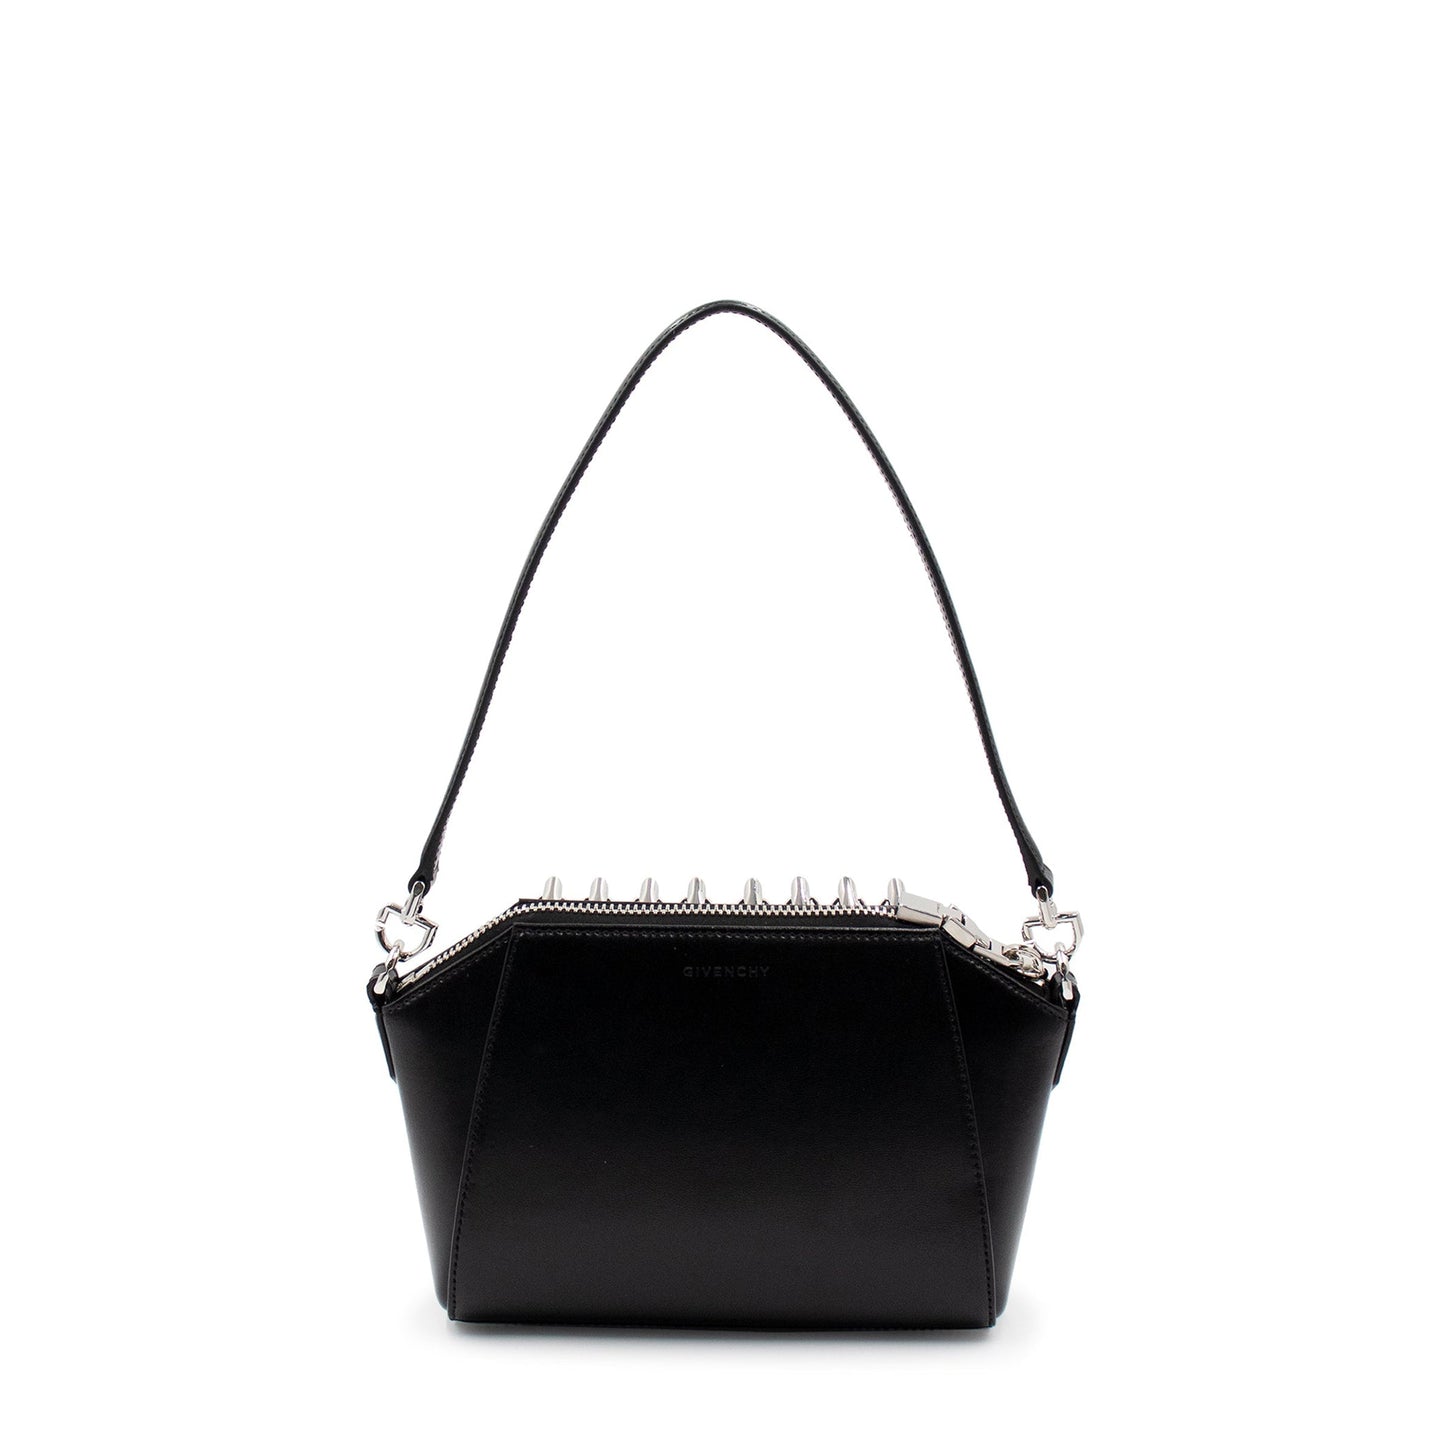 XS Antigona Studs Bag in Smooth Leather in Black